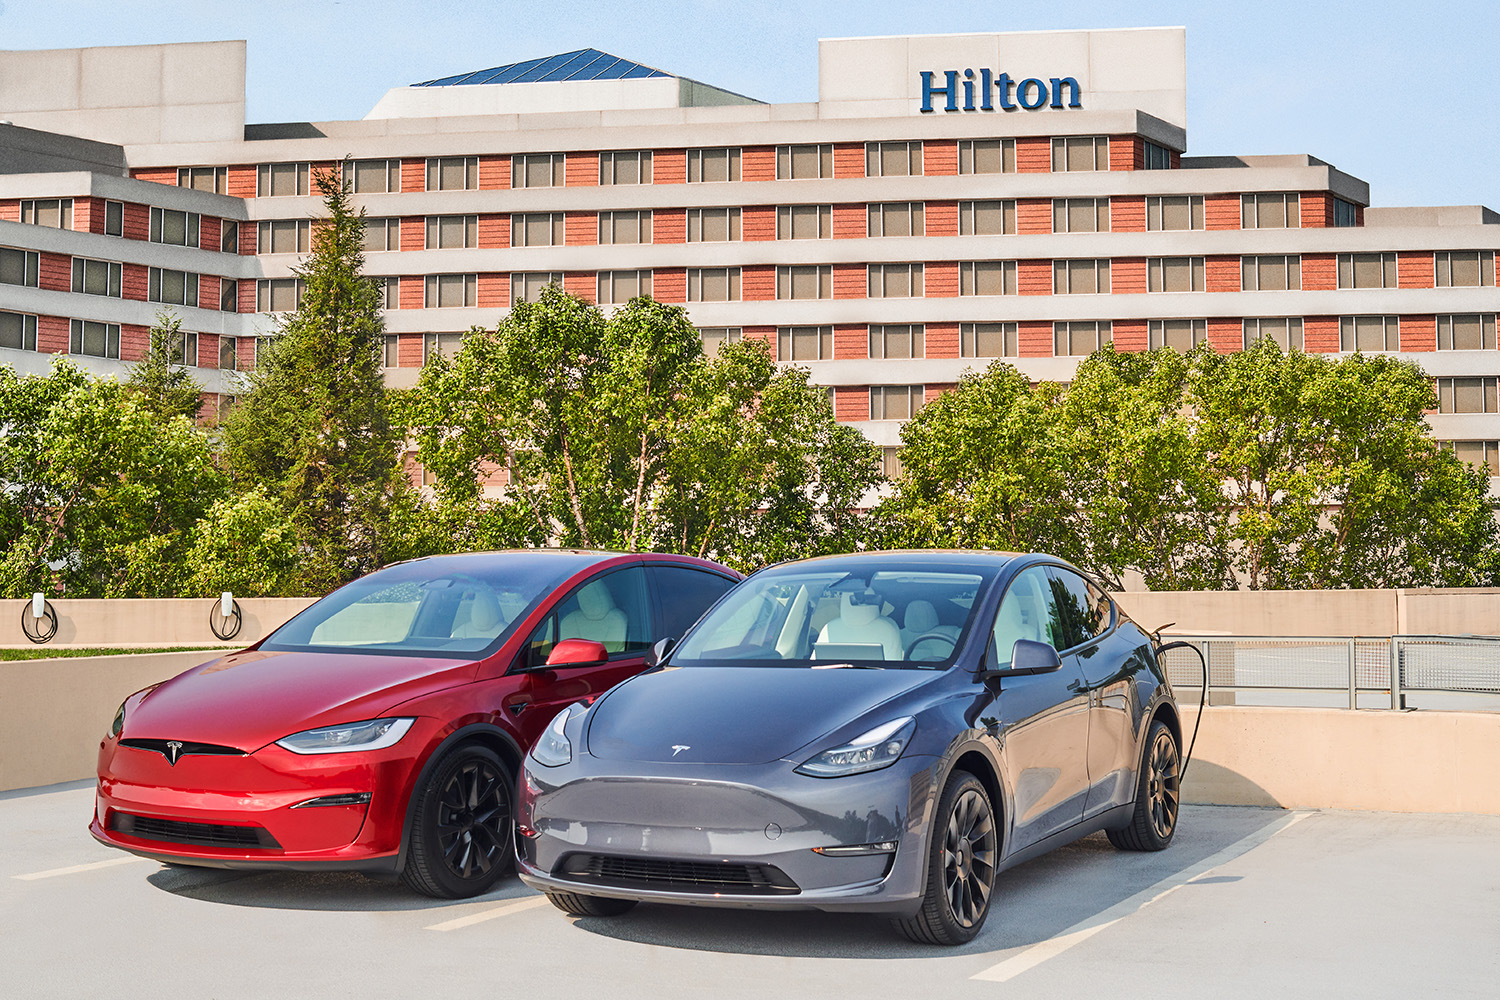 Hilton Tesla chargers